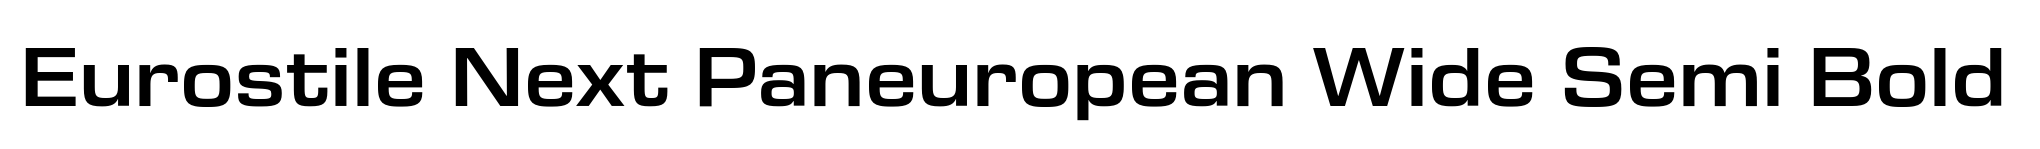 Eurostile Next Paneuropean Wide Semi Bold image